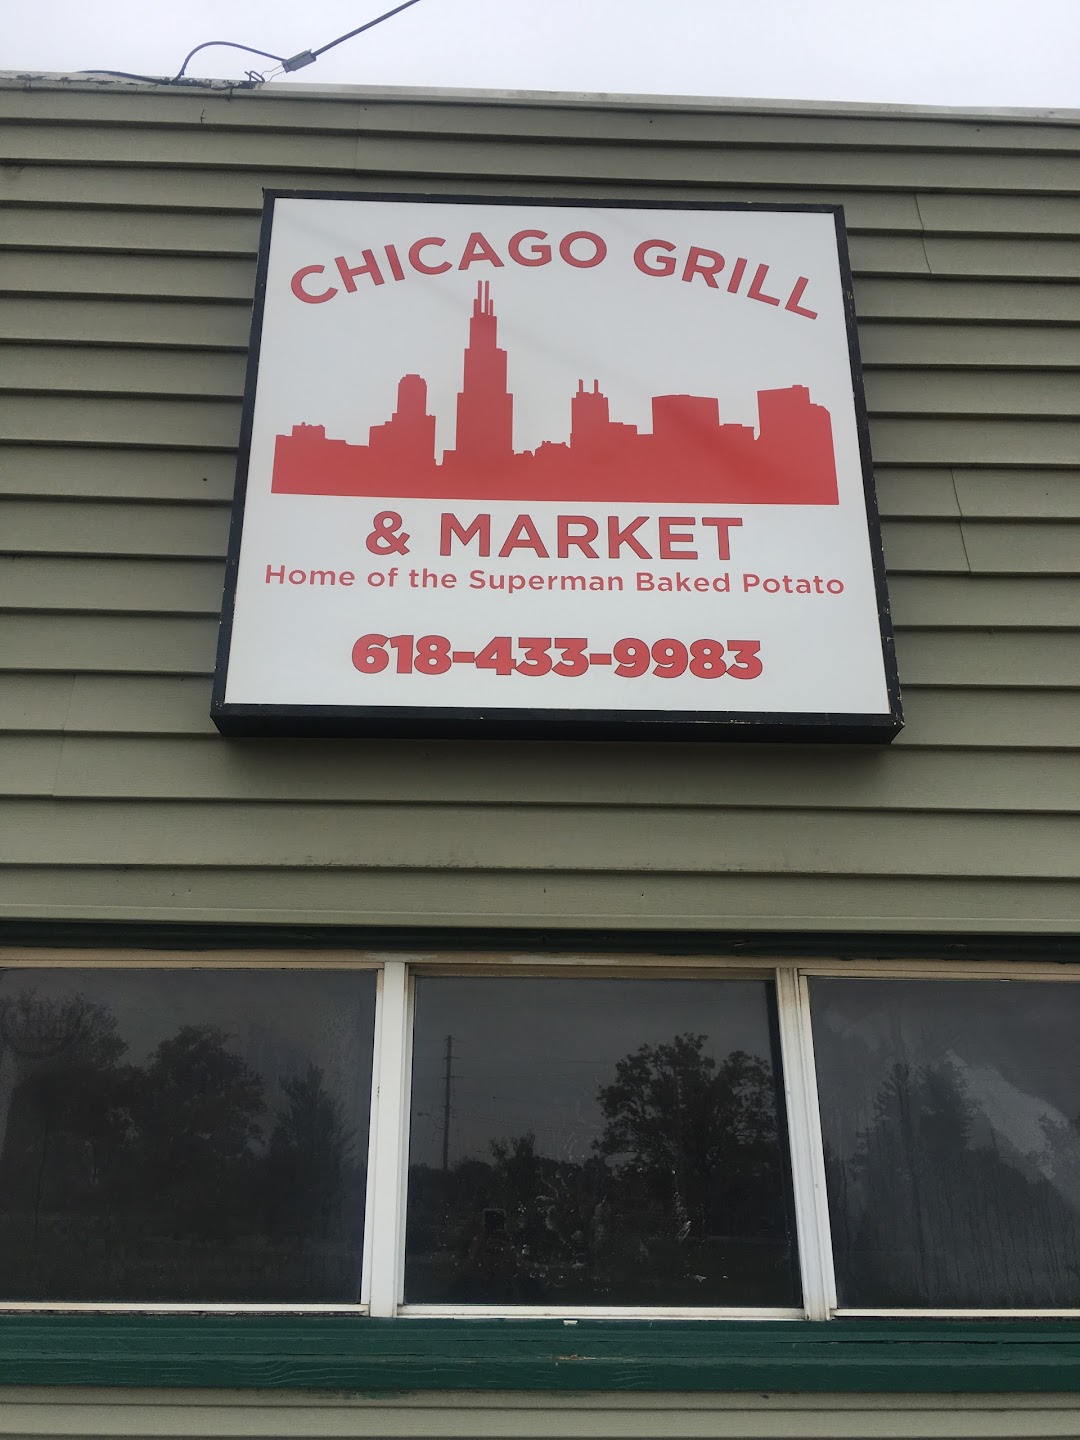 Chicago grill & market